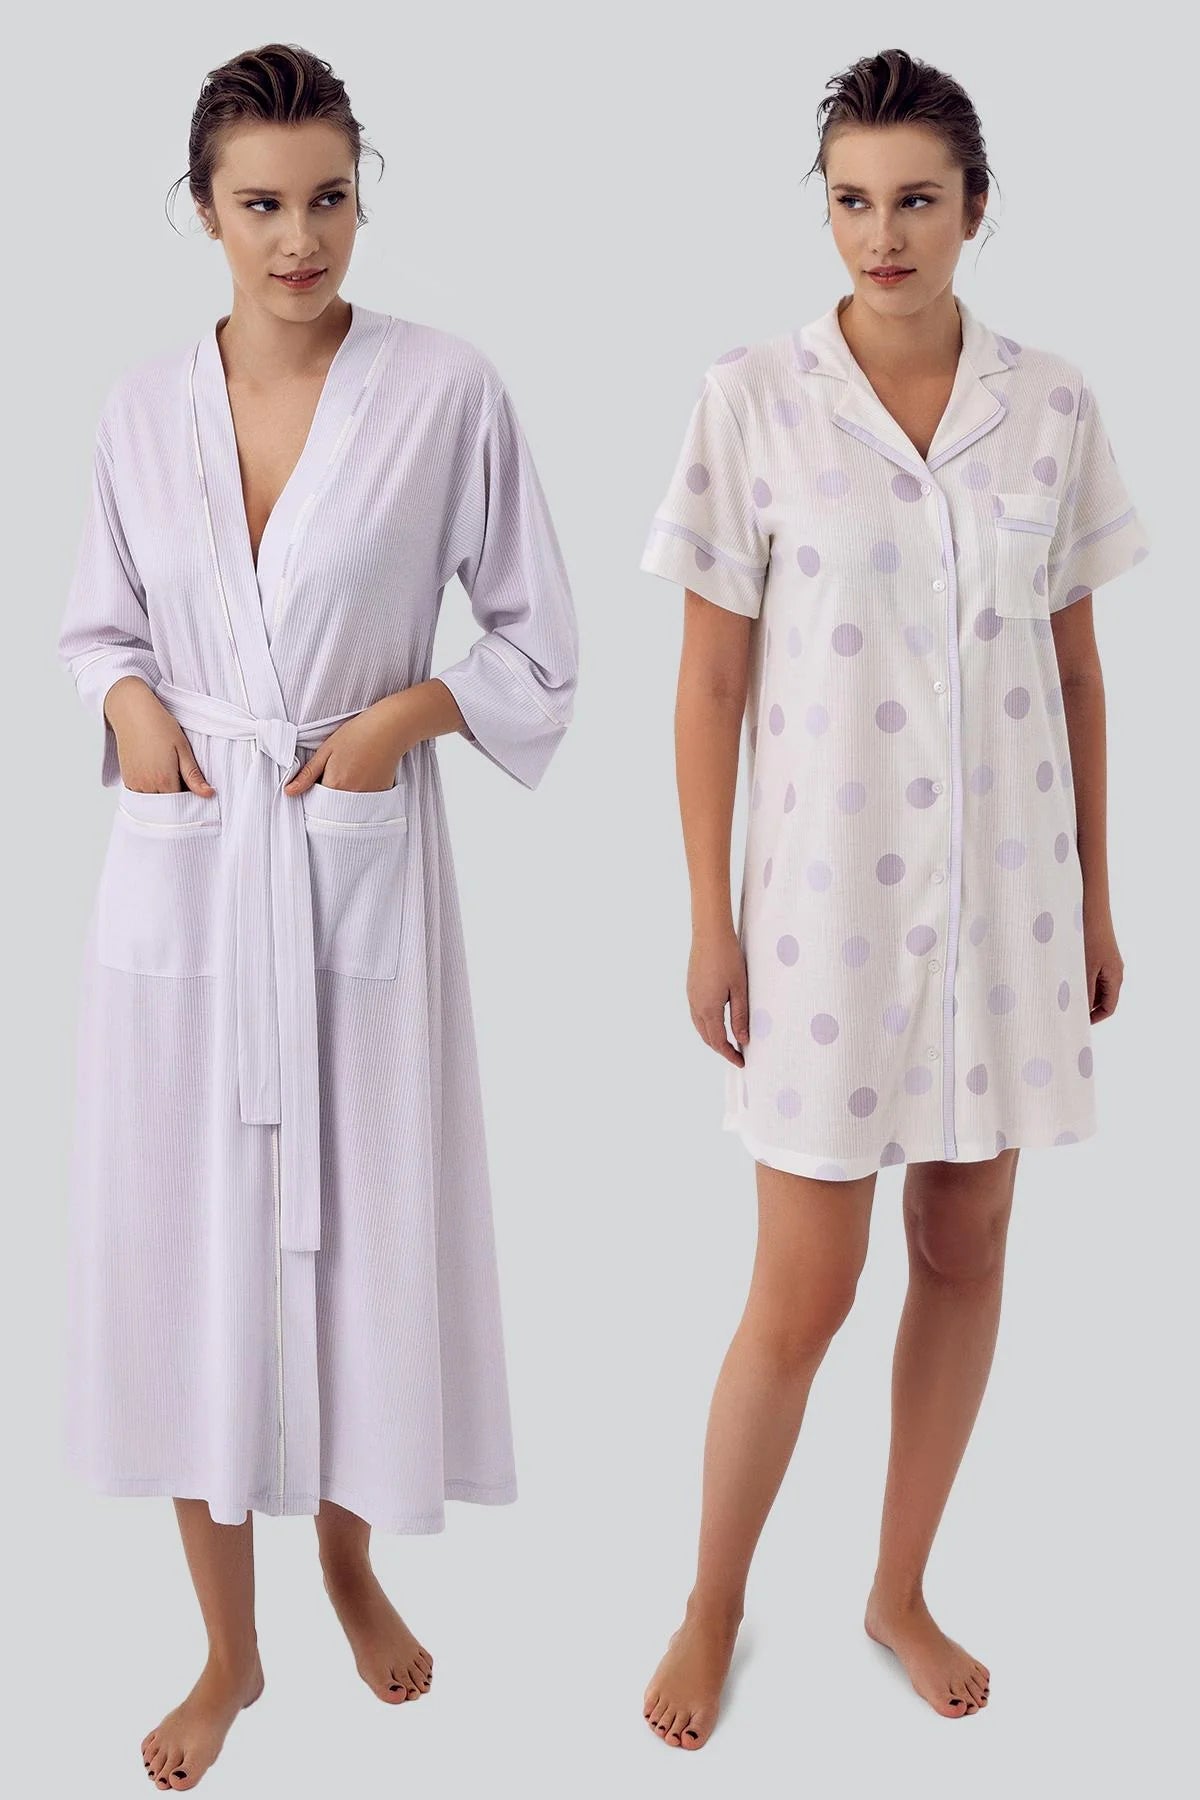 Shopymommy 16410 Polka Dot Maternity & Nursing Nightgown With Robe Lilac